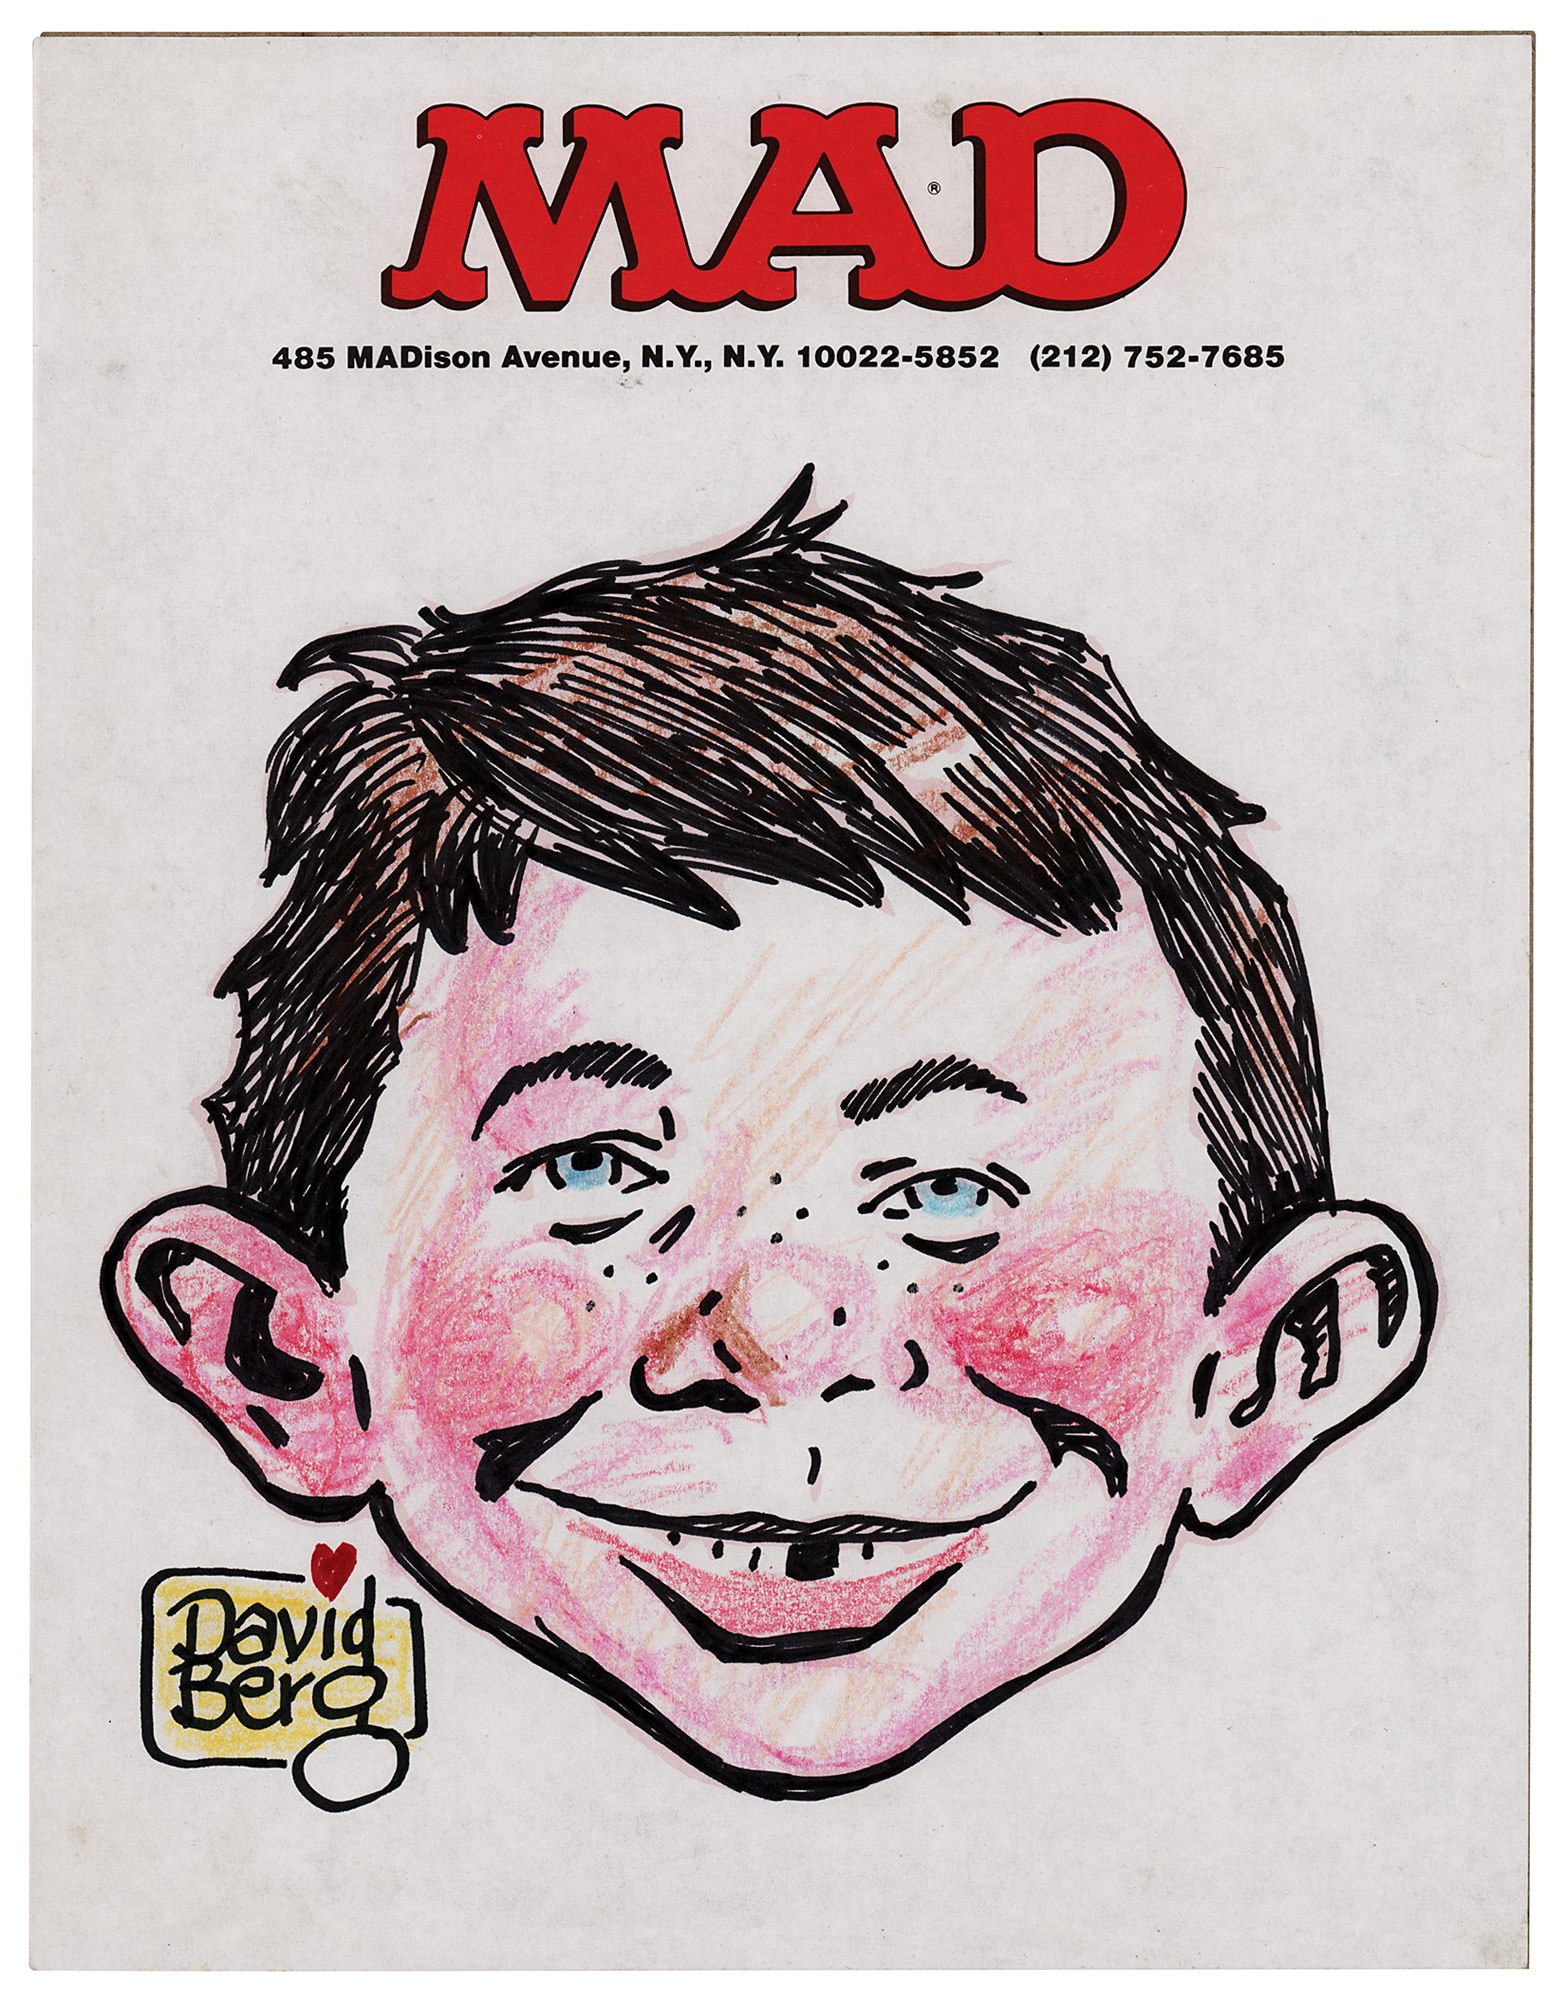 Mascot of mad magazine